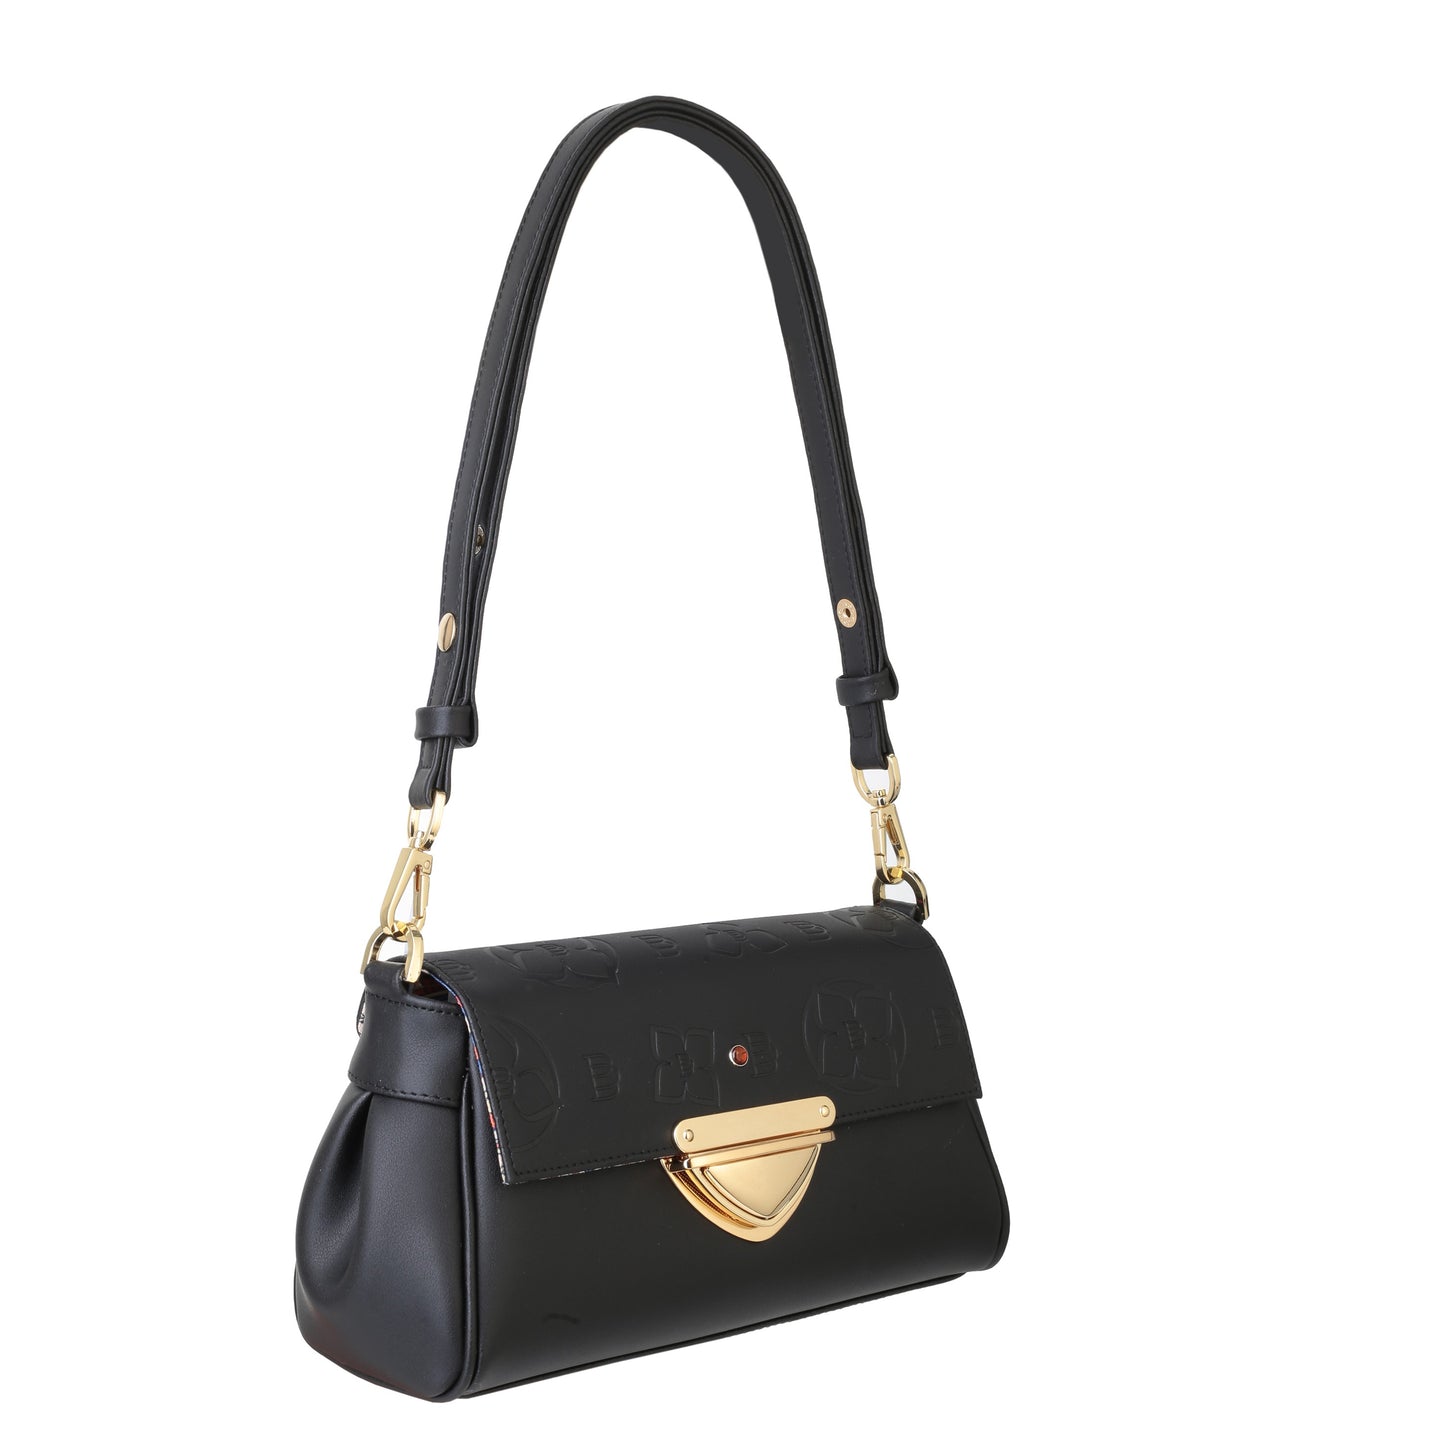 MEGAN NAPA BLACK women's leather handbag